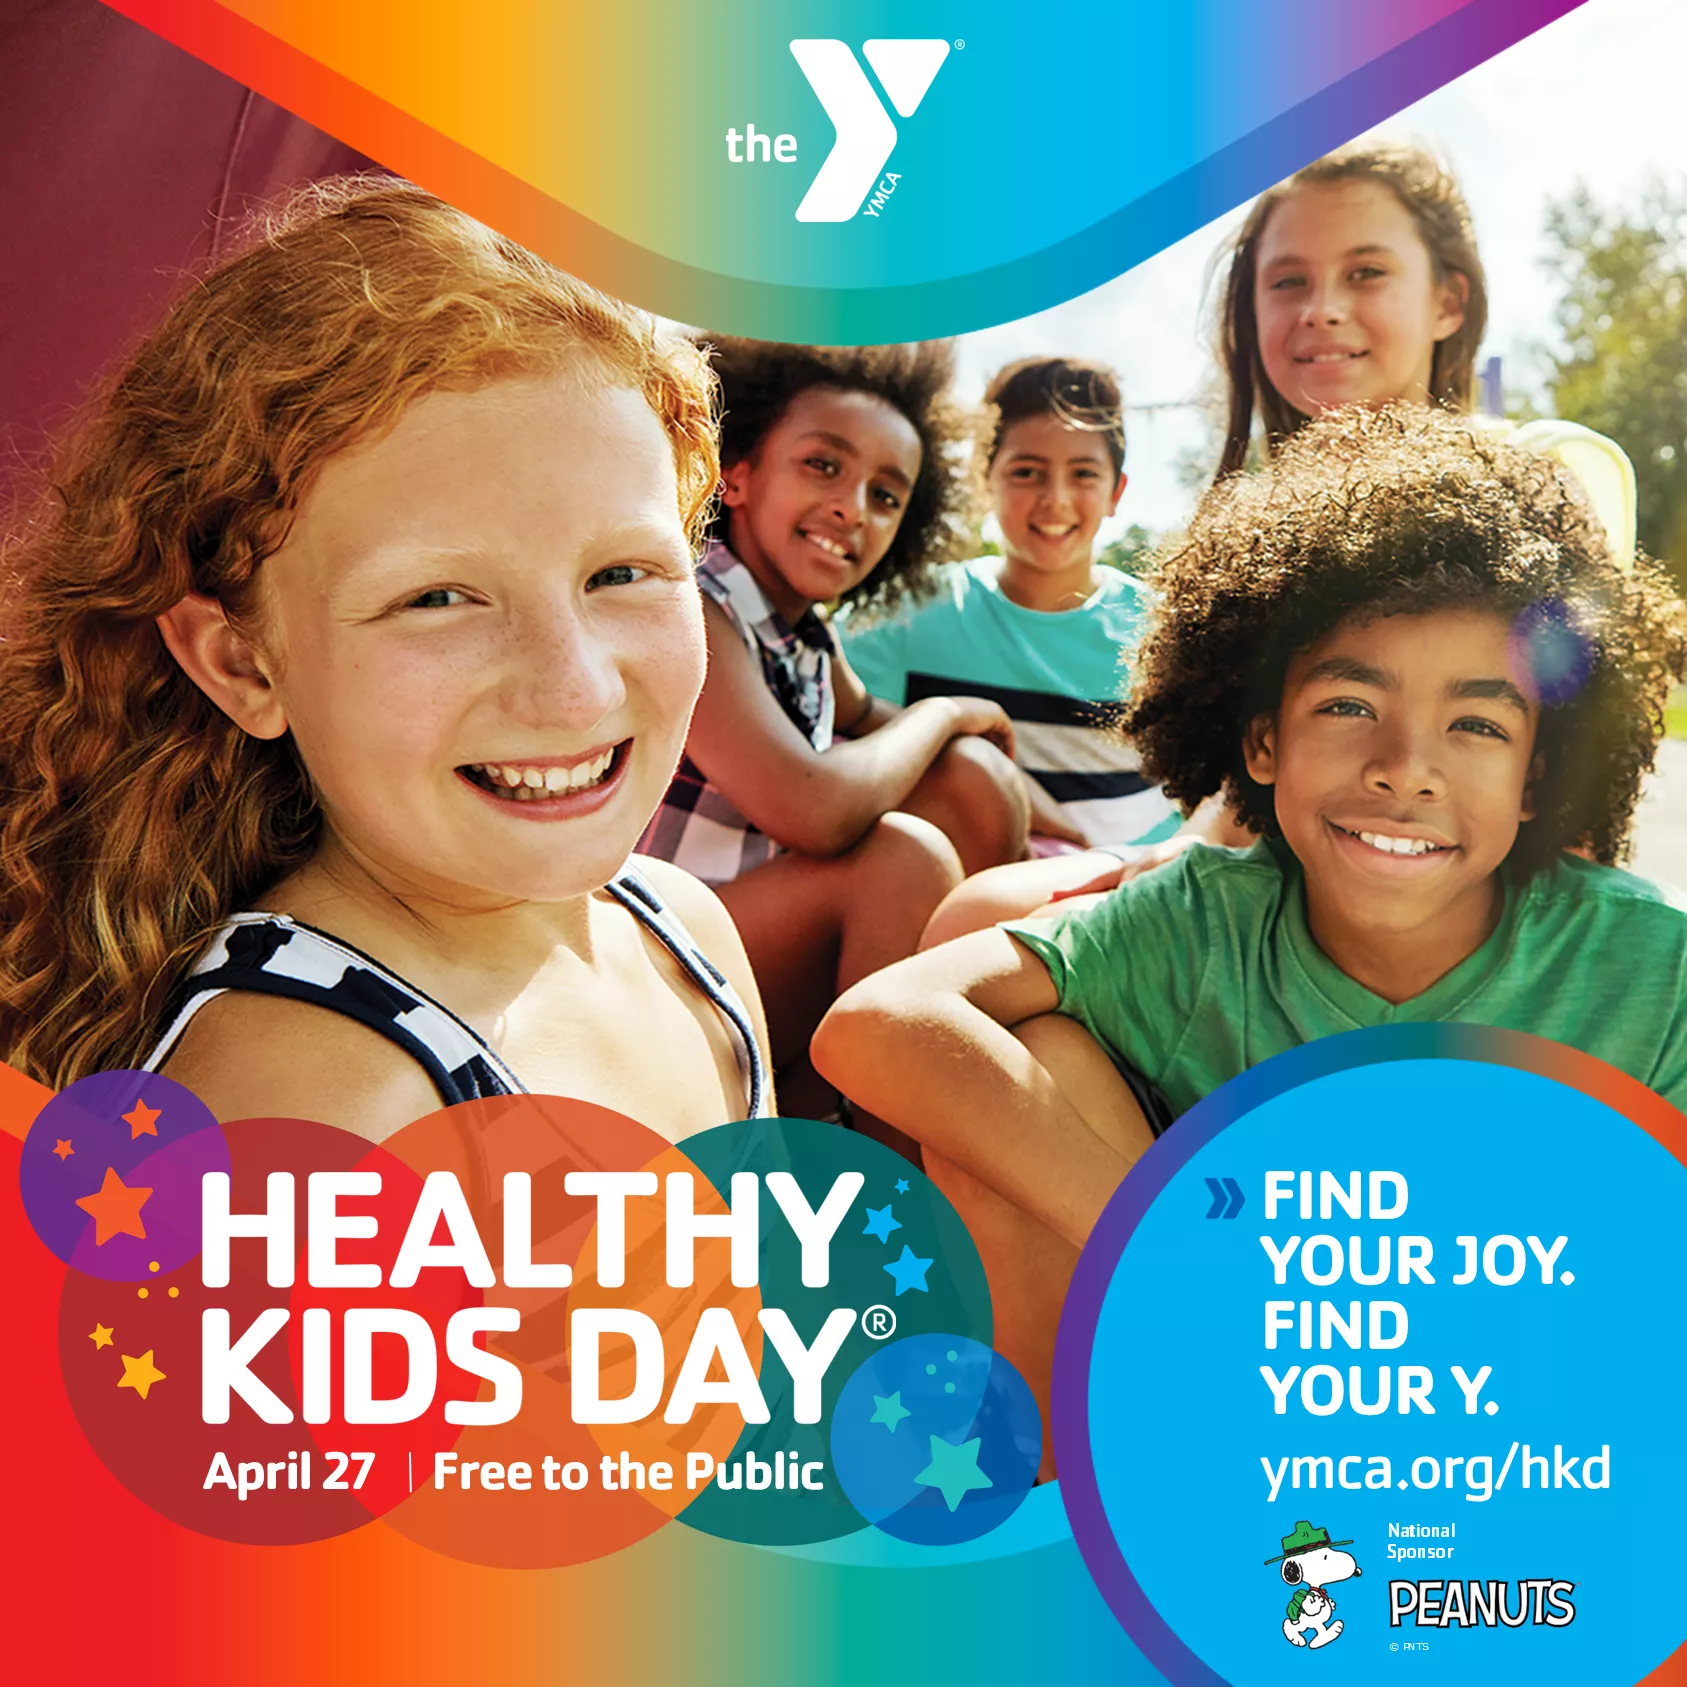 Healthy Happy kids. Find your joy. Find your Y. 